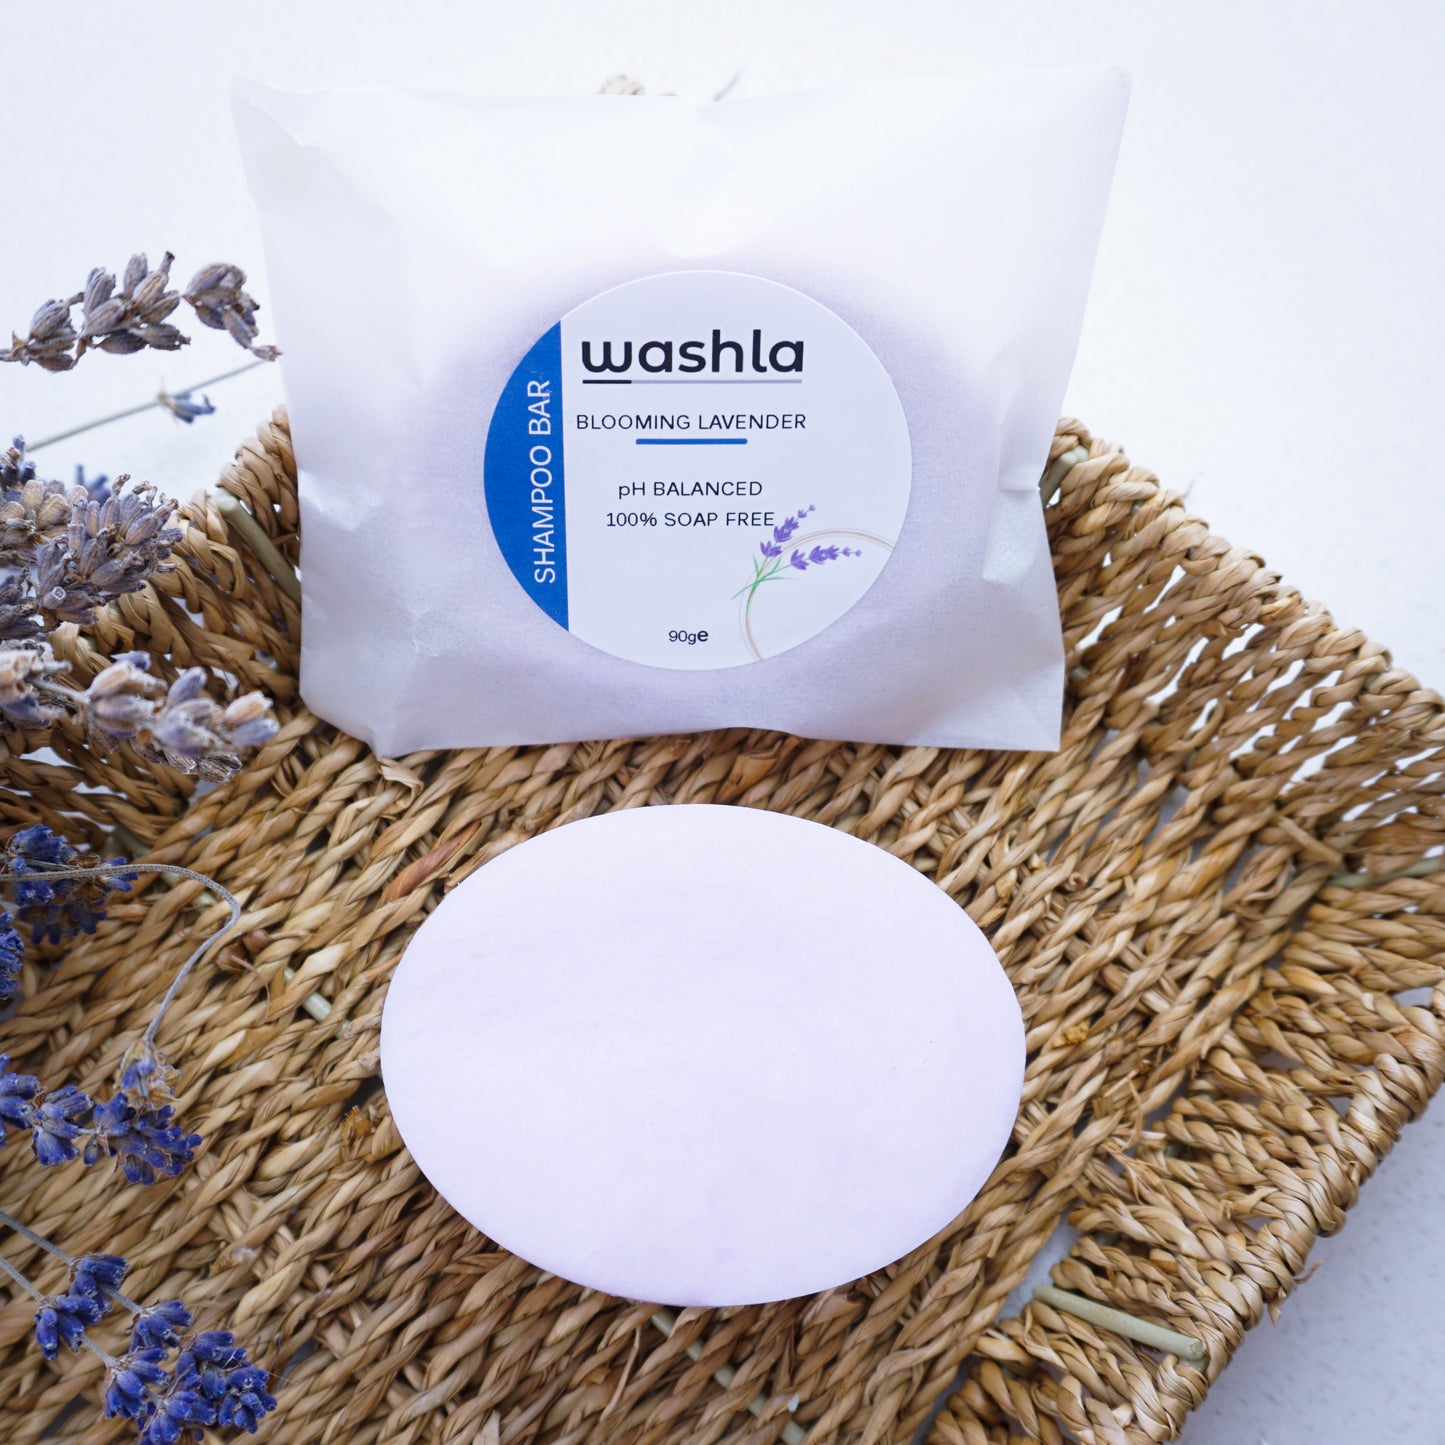 Washla 90g Wrapped Lavender shampoo bar sitting in hamper basket surrounded by lavender plant